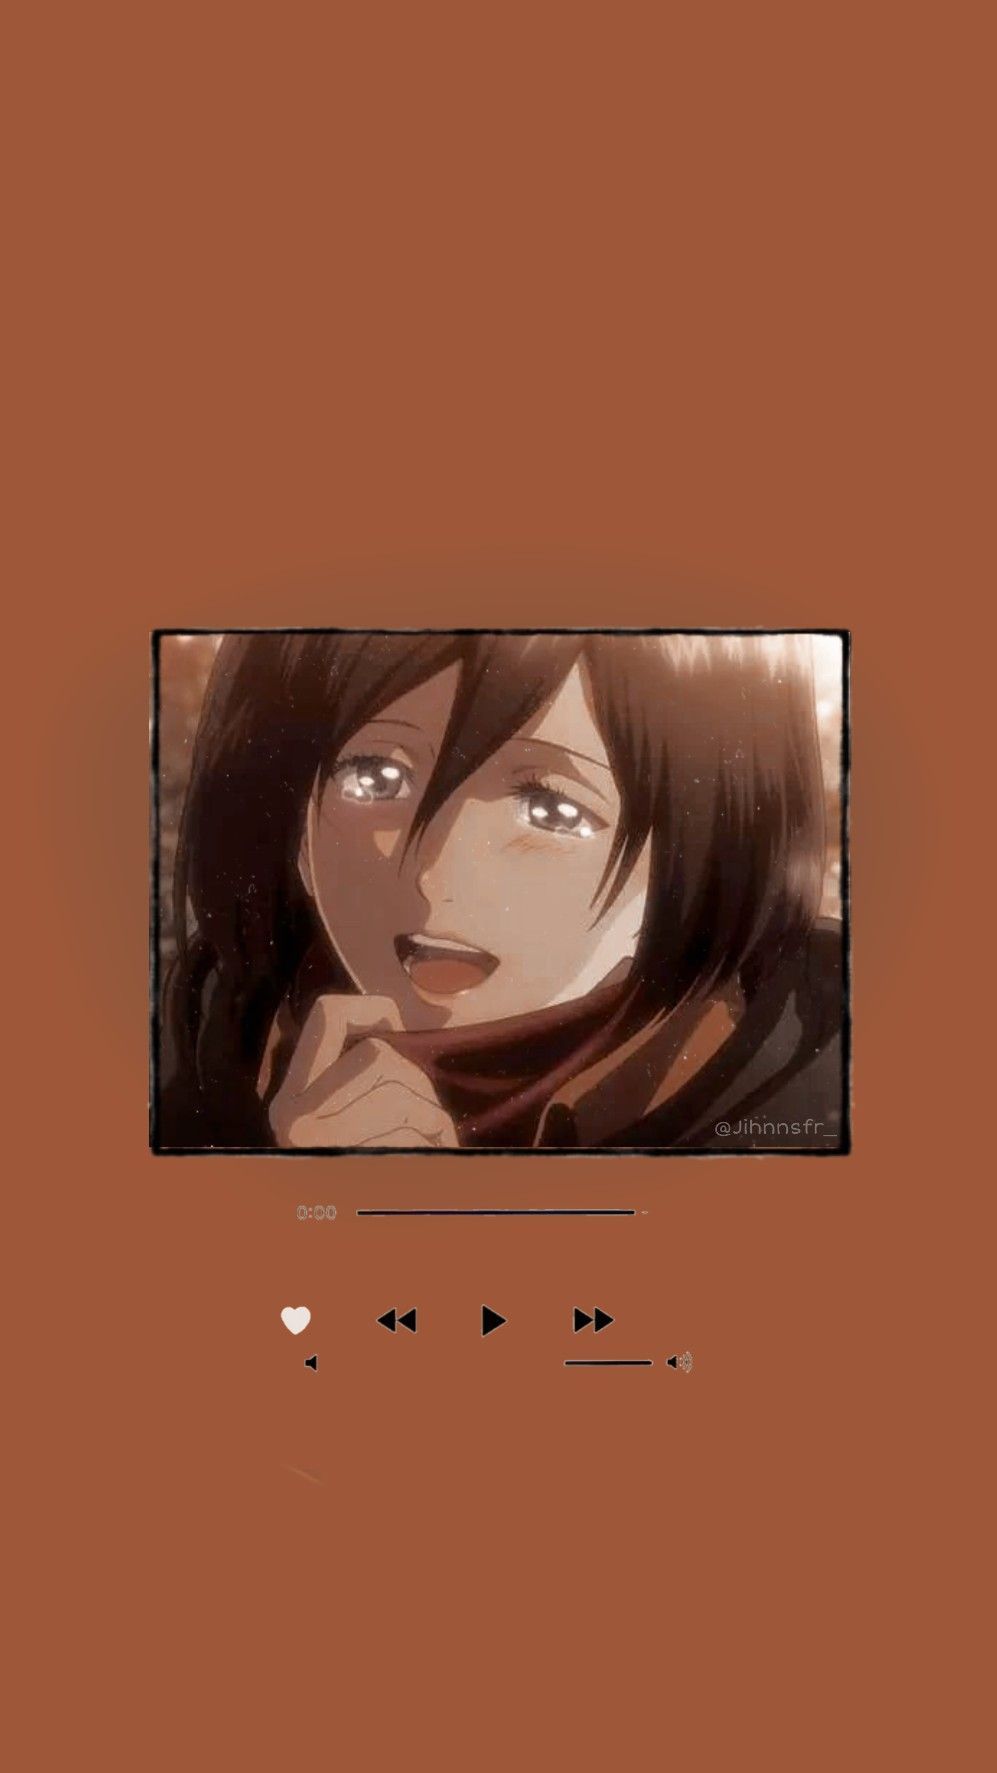 Mikasa Ackerman. Anime wallpaper, Cute anime wallpaper, Anime background